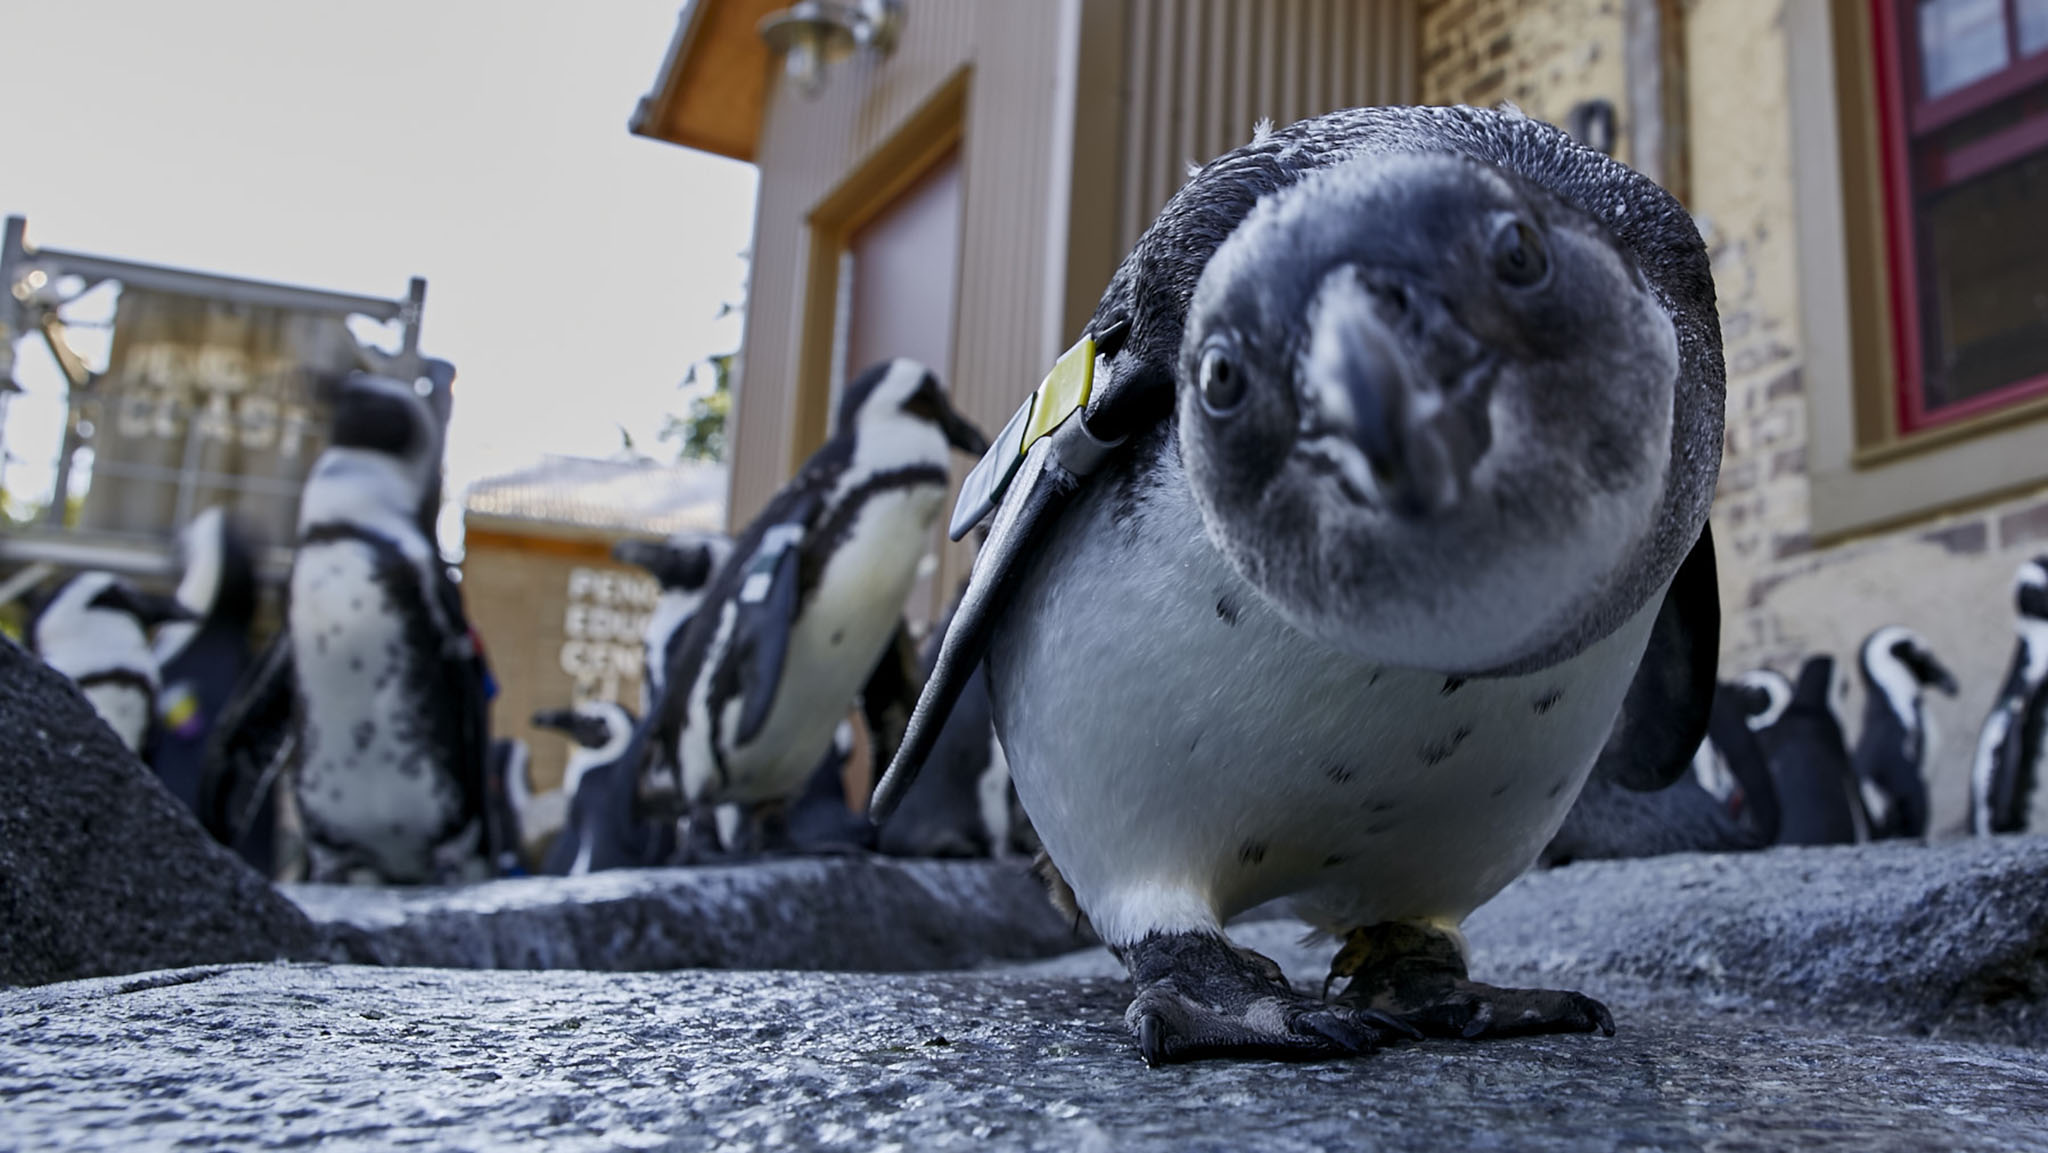 Penguin Encounters | The Maryland Zoo